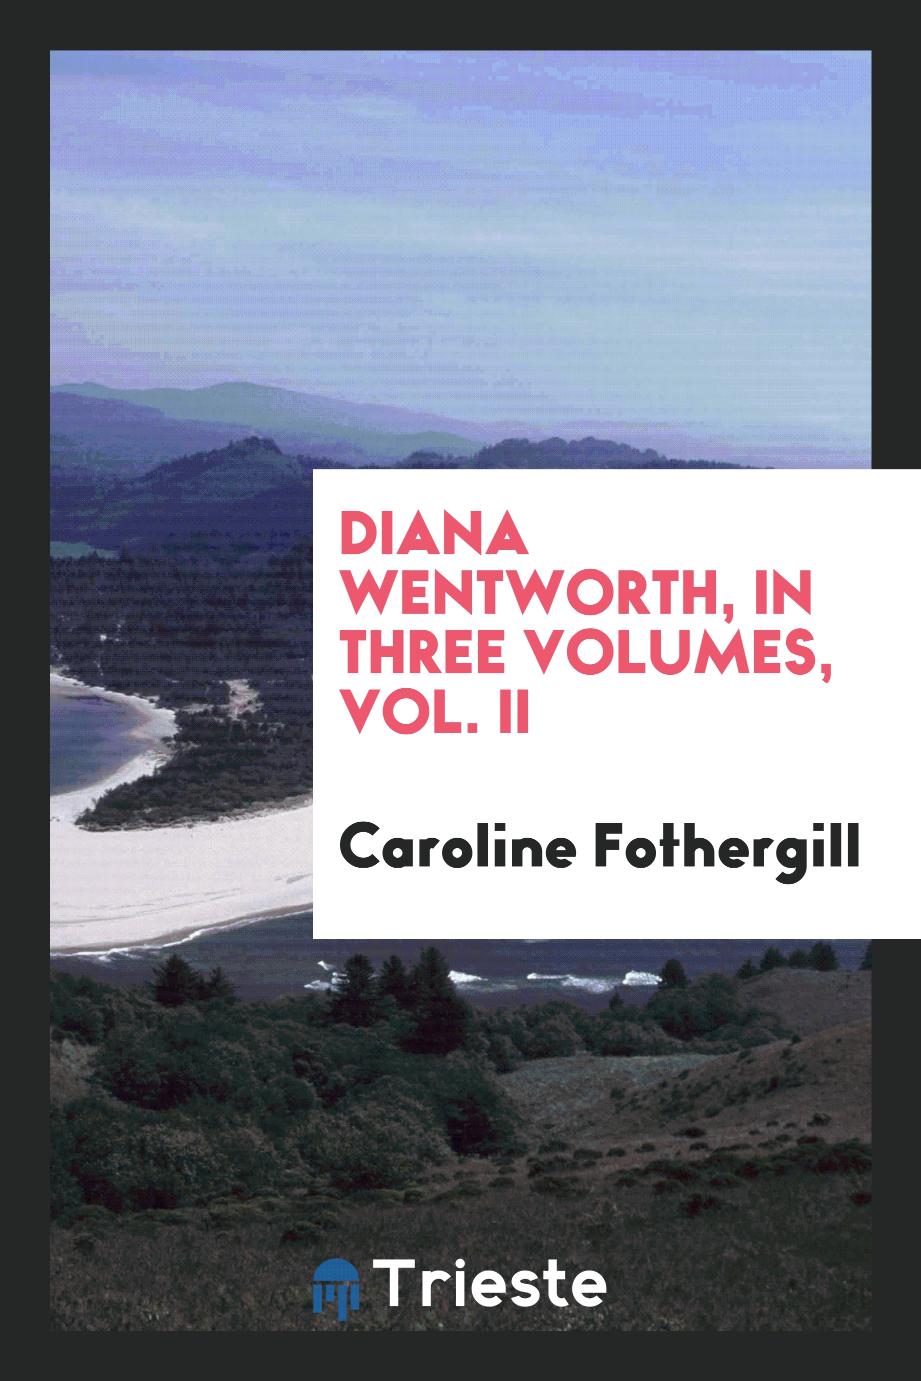 Diana Wentworth, in three volumes, vol. II